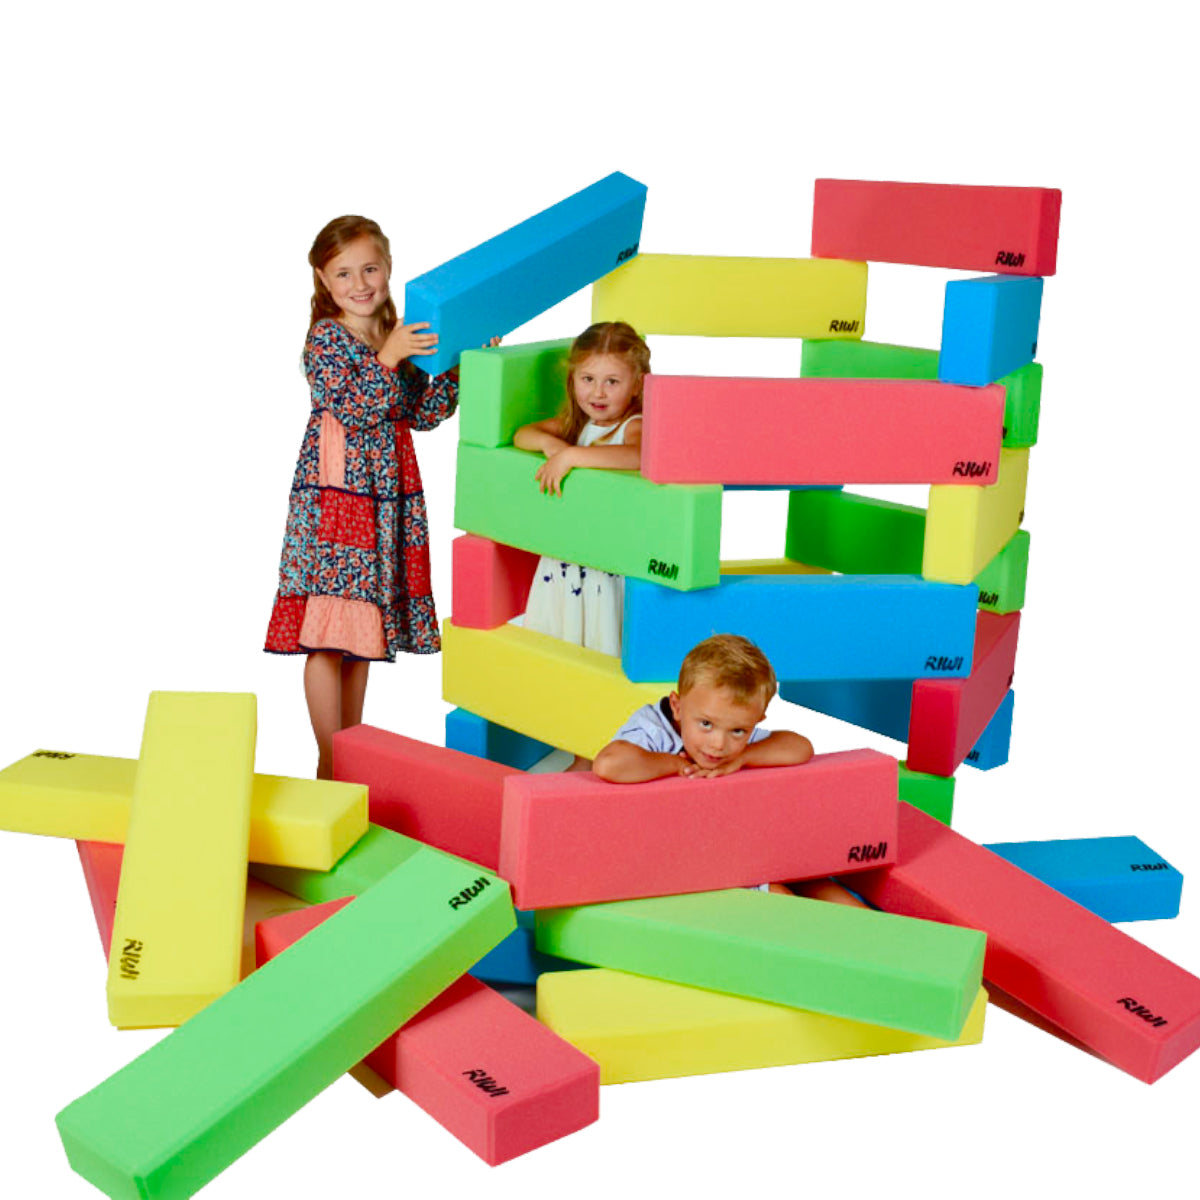 RIWI building blocks kindergarten soft foam blocks xxl